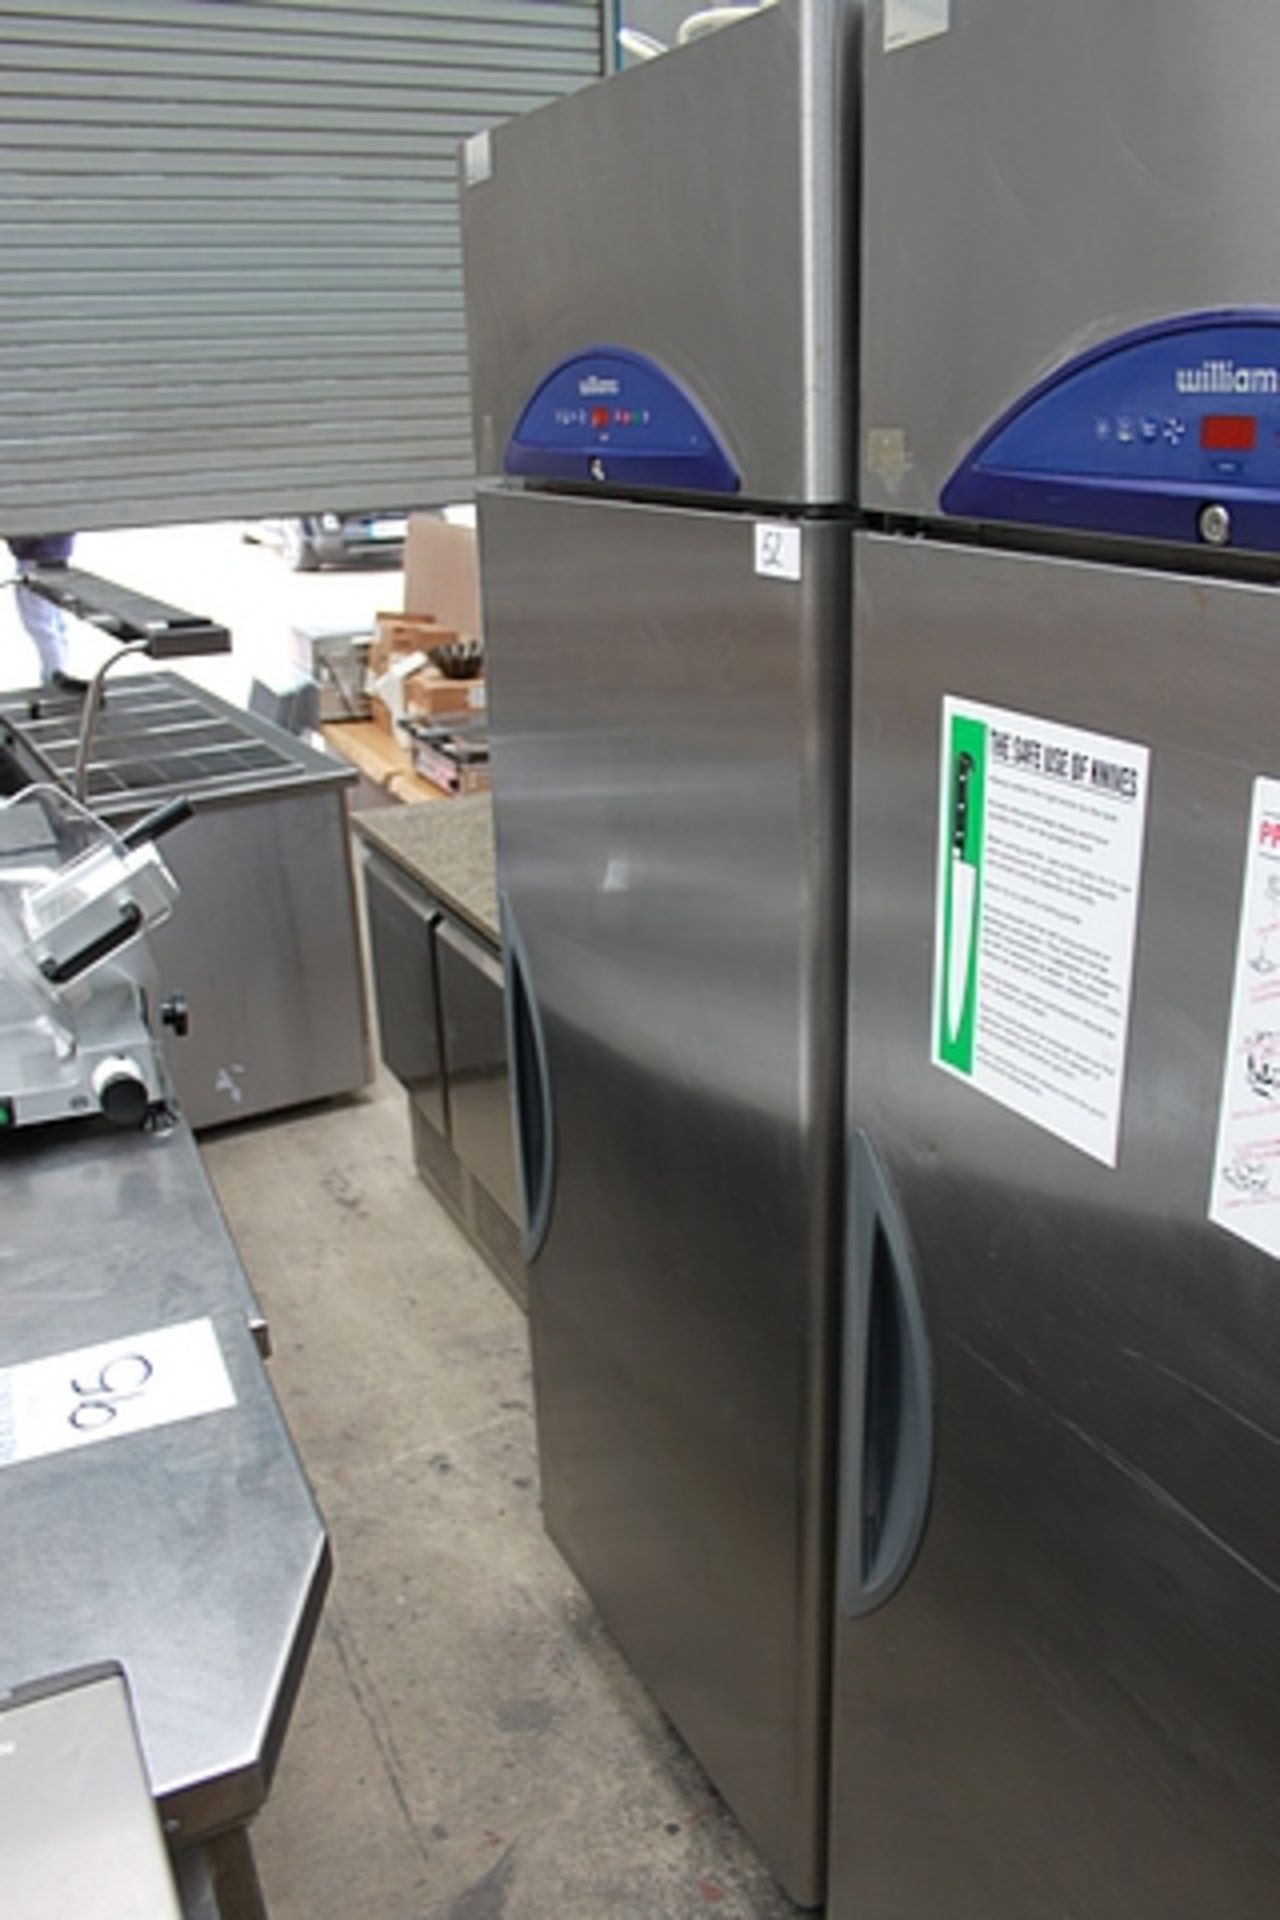 Williams HG1TSS stainless steel upright refrigerator temperature range +1 / +4 C (s/n 0504-417555)